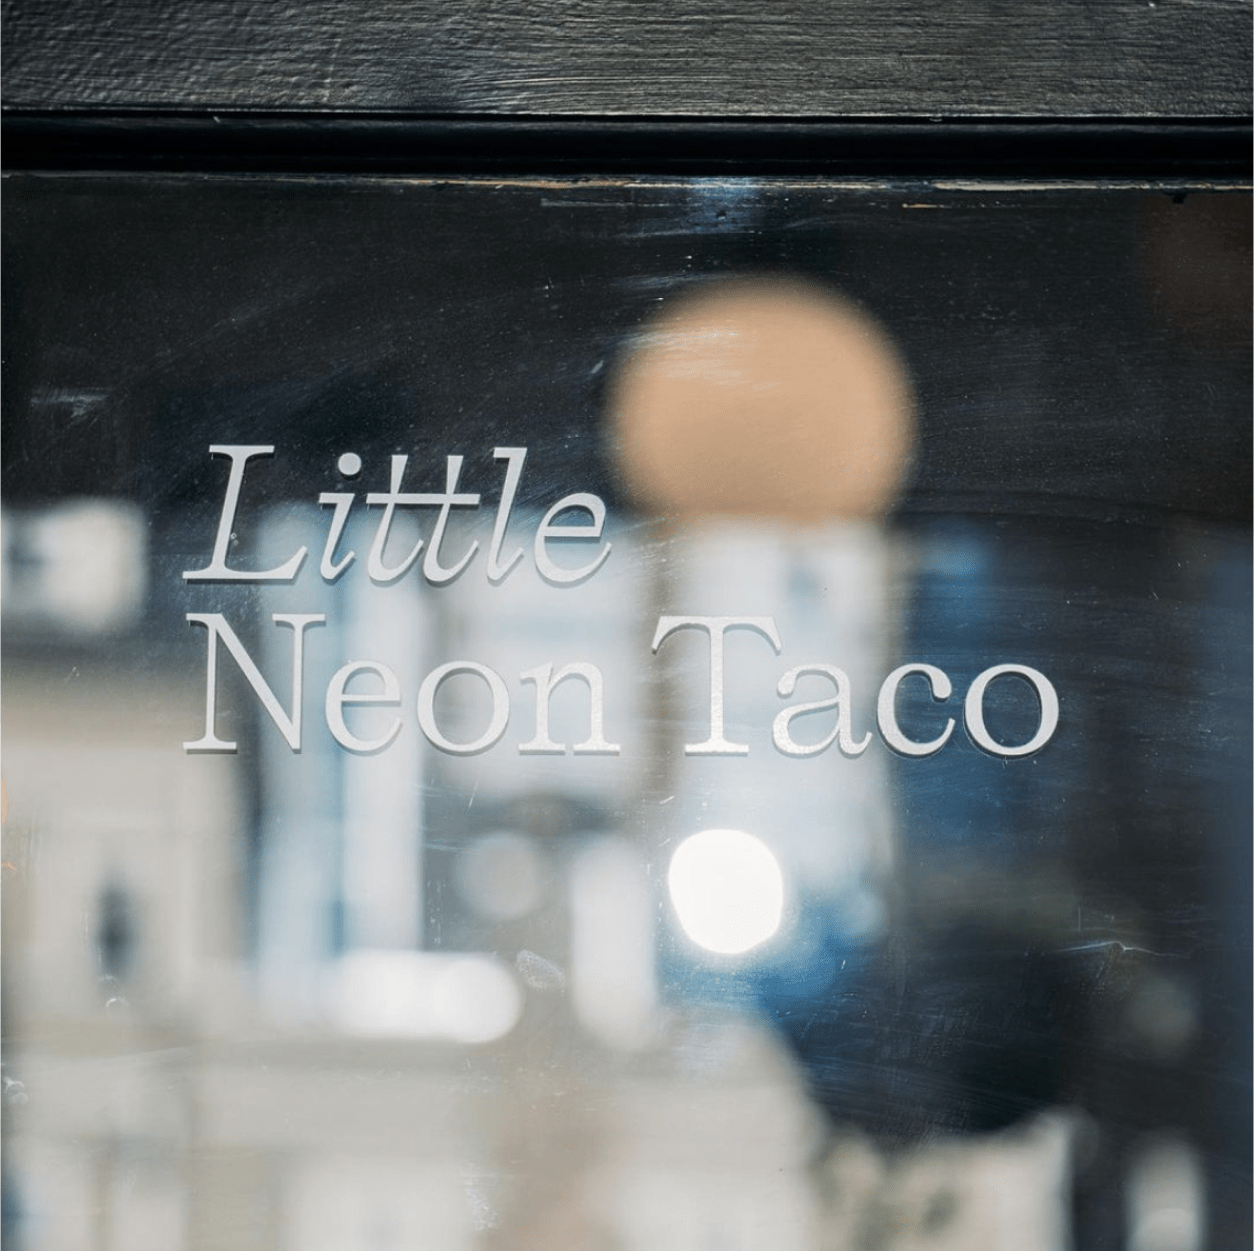 Little Neon Taco window sign